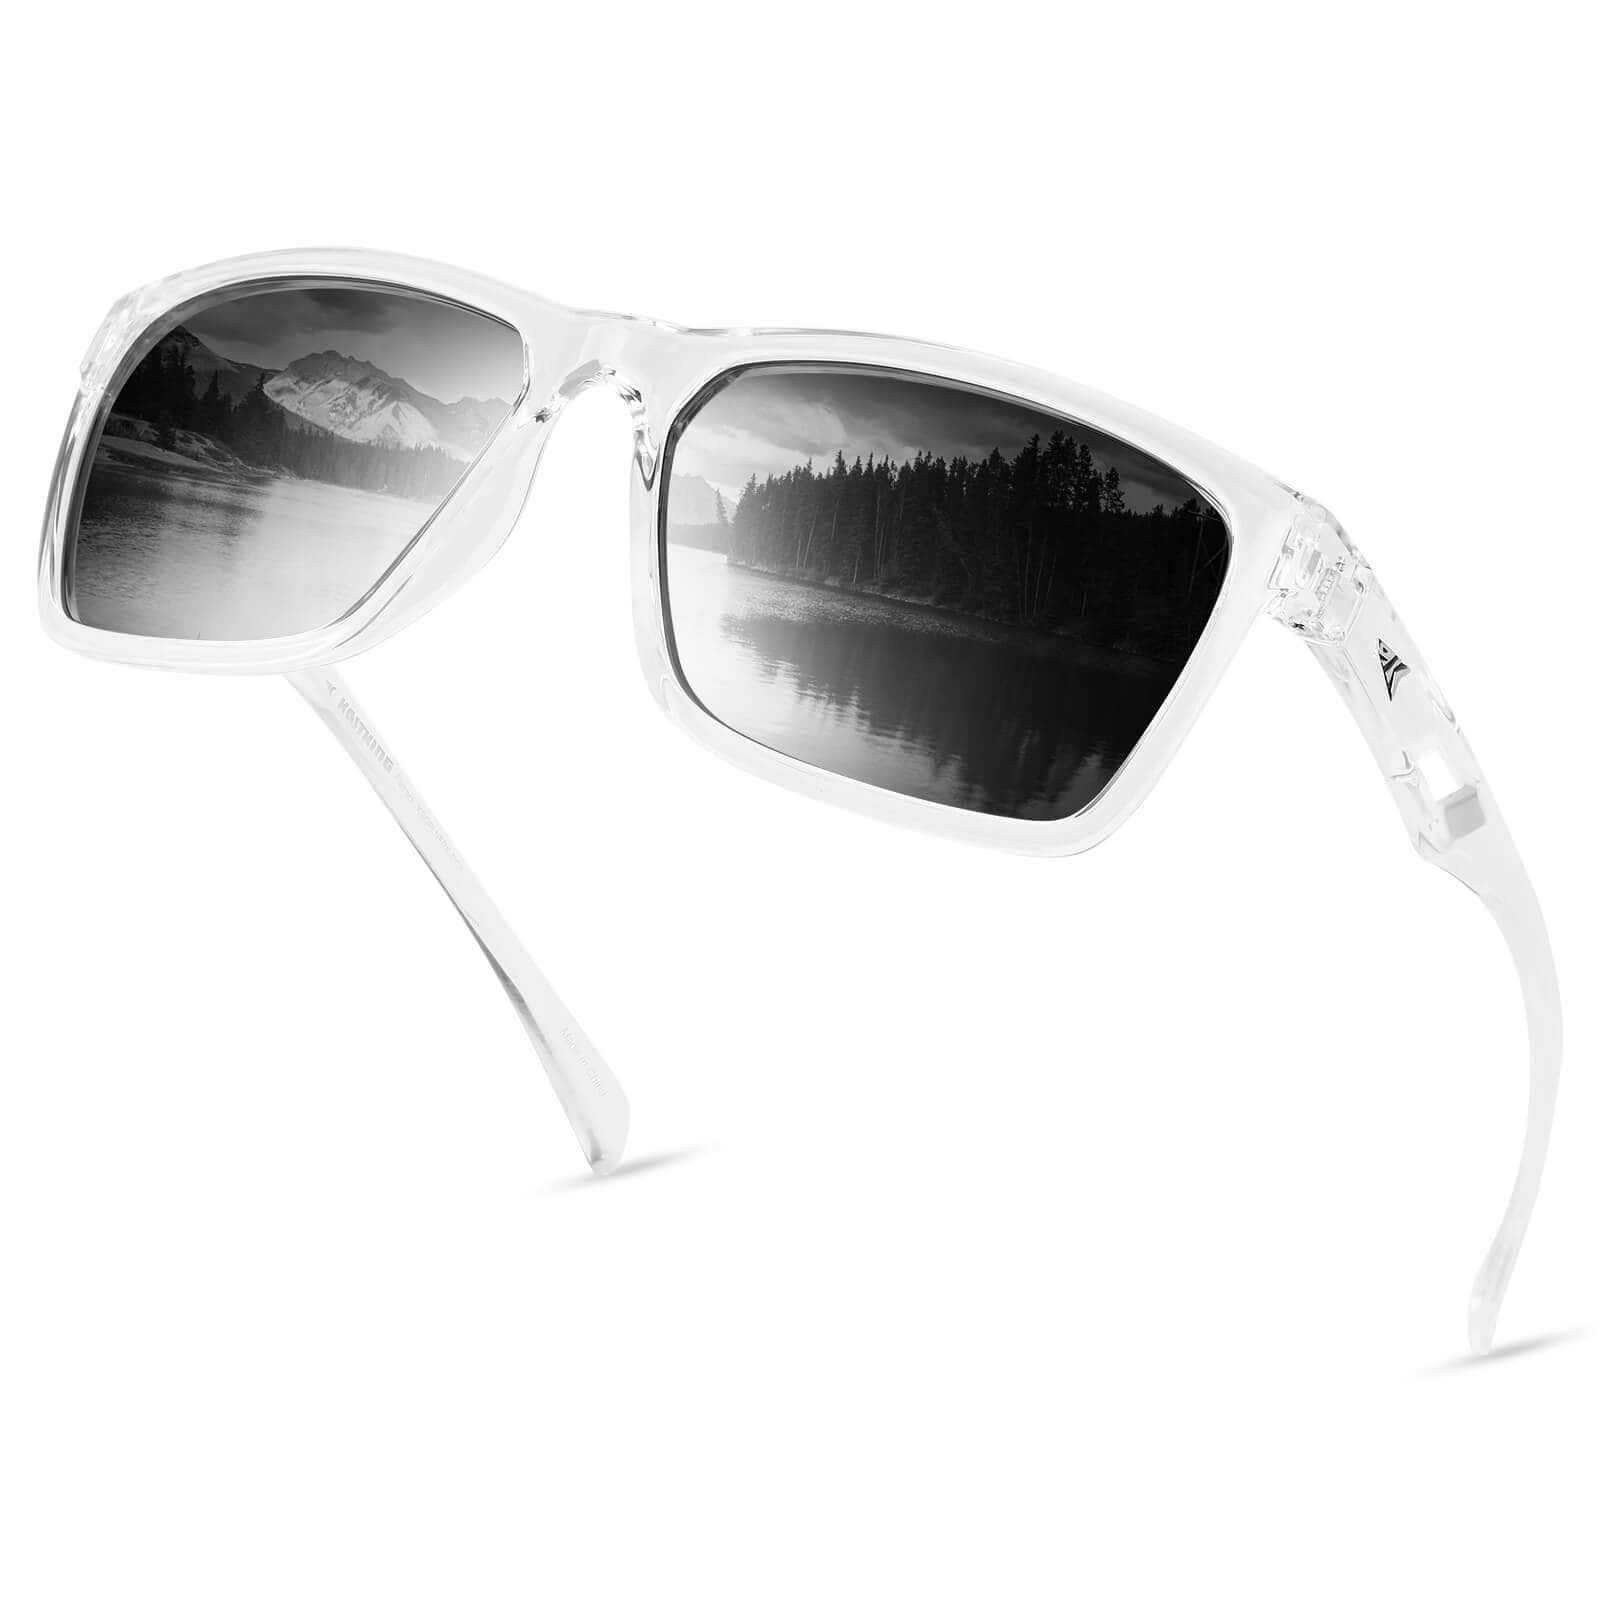 KastKing FlatRock Polarized Sport Sunglasses